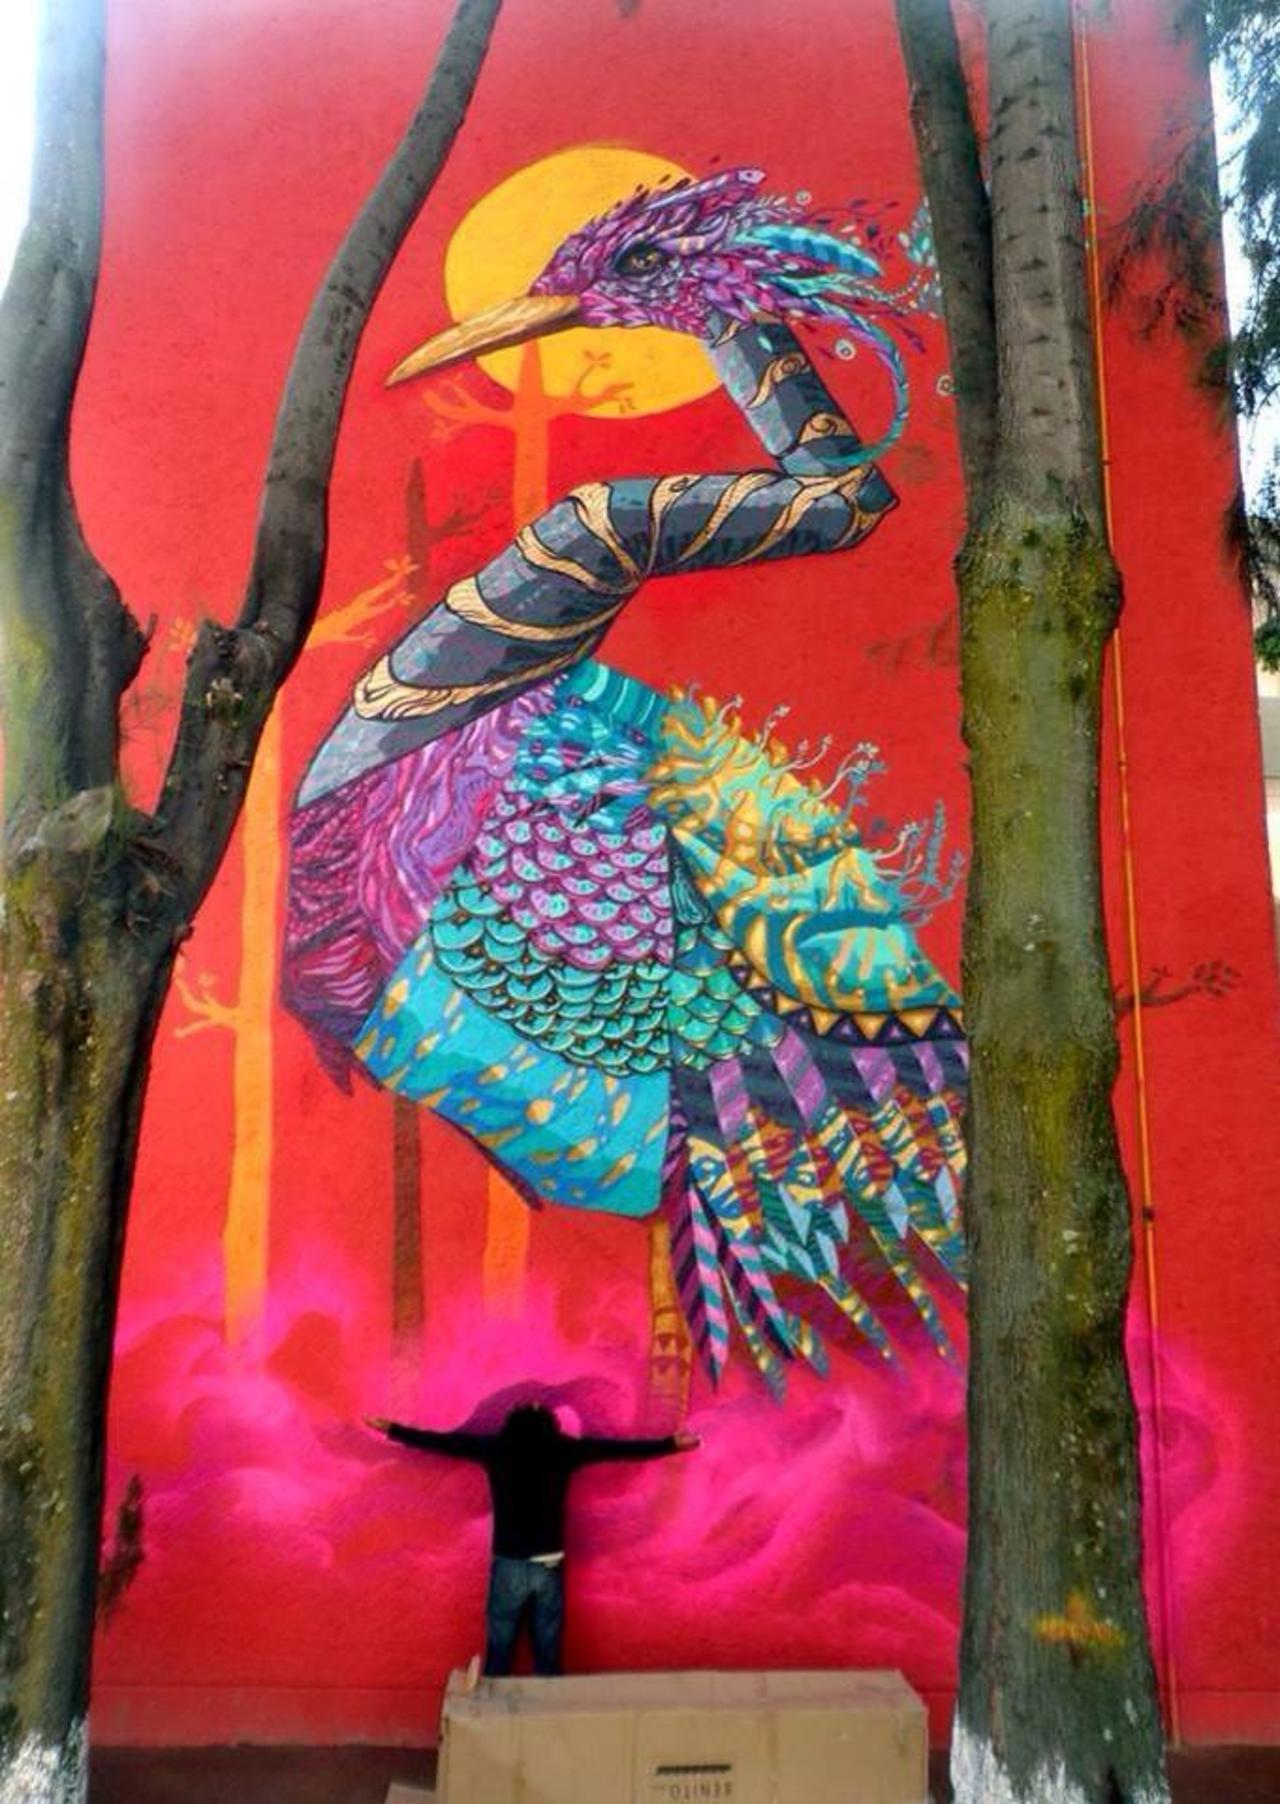 Stunning color “@GoogleStreetArt: 'Songs of Colour' by NacHo Wm ft. Farid Rueda #art #graffiti #streetart http://t.co/MOIkSL6A16” #mural